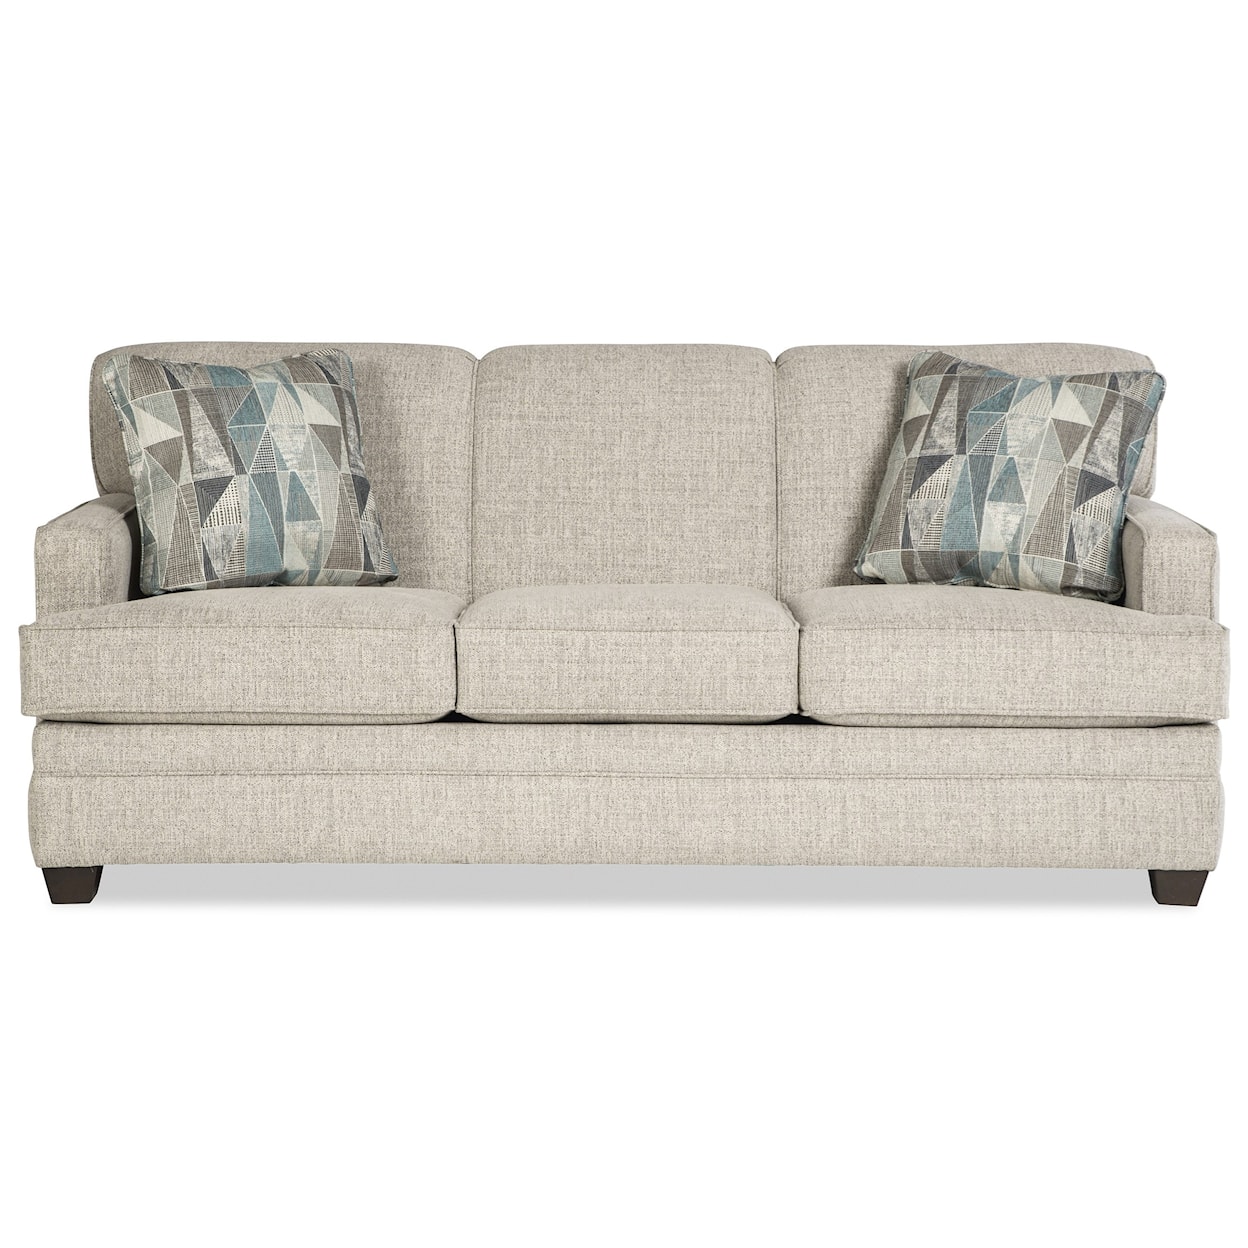 Hickory Craft 796250 Queen Sleeper Sofa